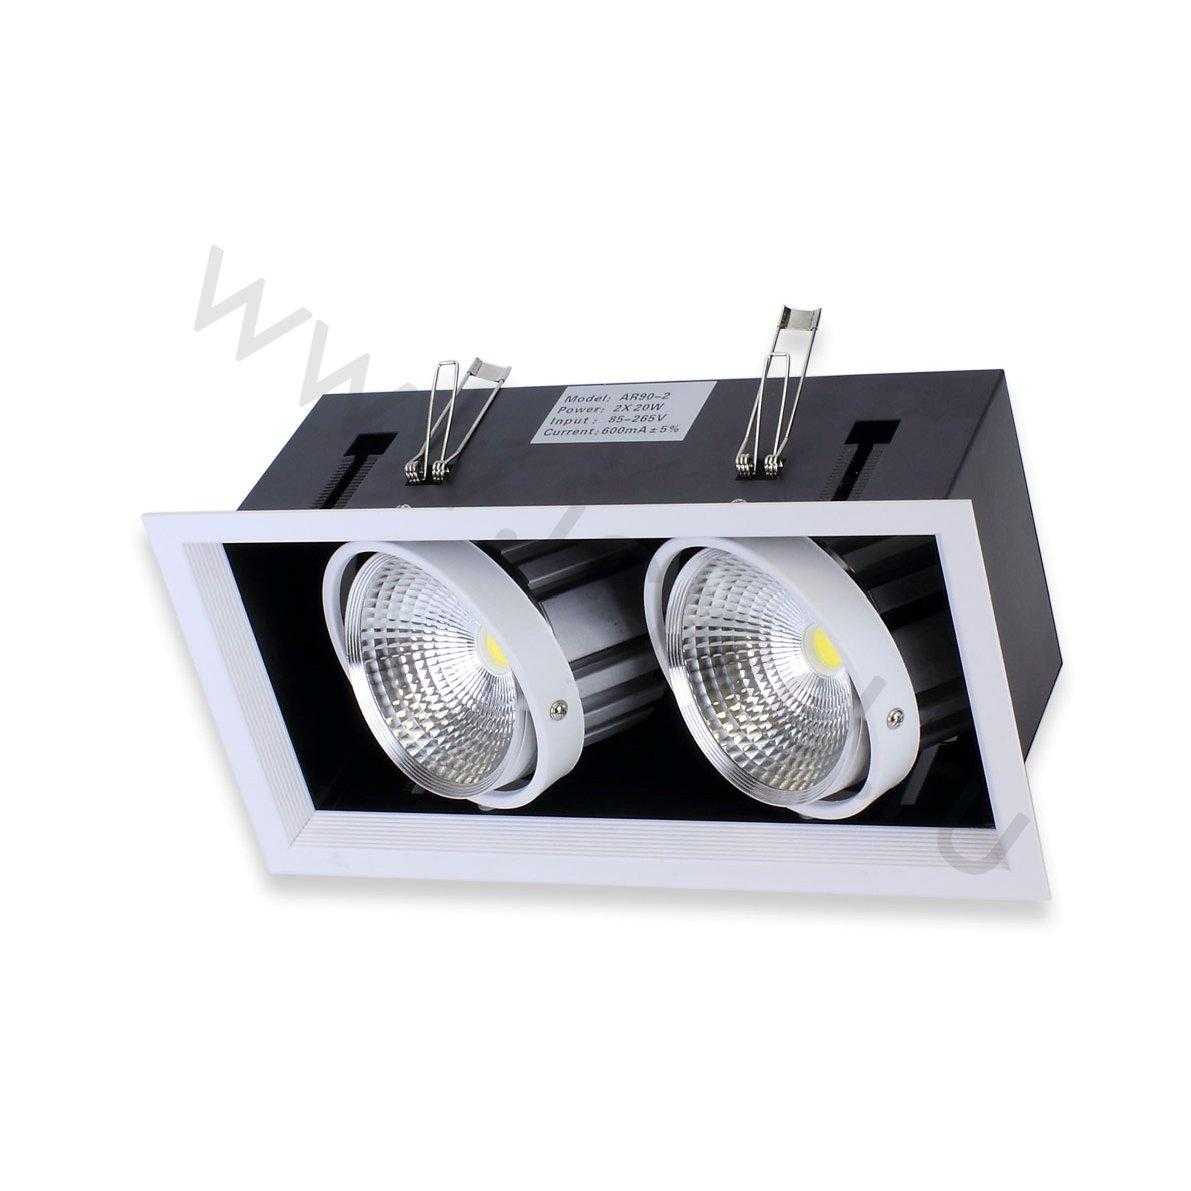 Светодиодные светильники Светодиодный светильник карданный AR90-2 OD2 (220V, 2х20W, white)